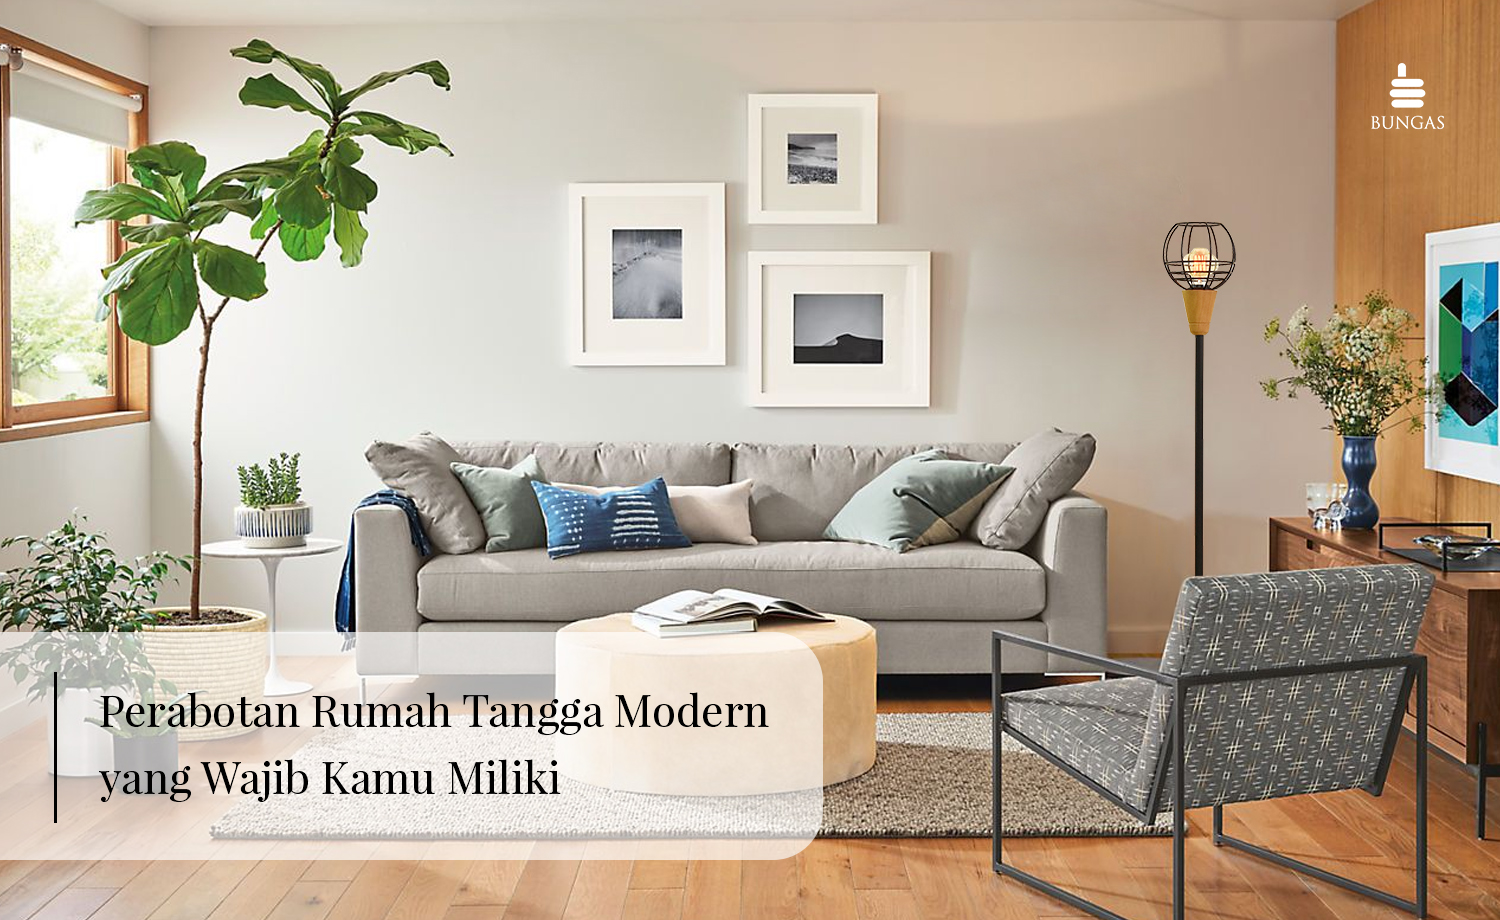 You are currently viewing Perabotan Rumah Tangga Modern yang Wajib Kamu Miliki